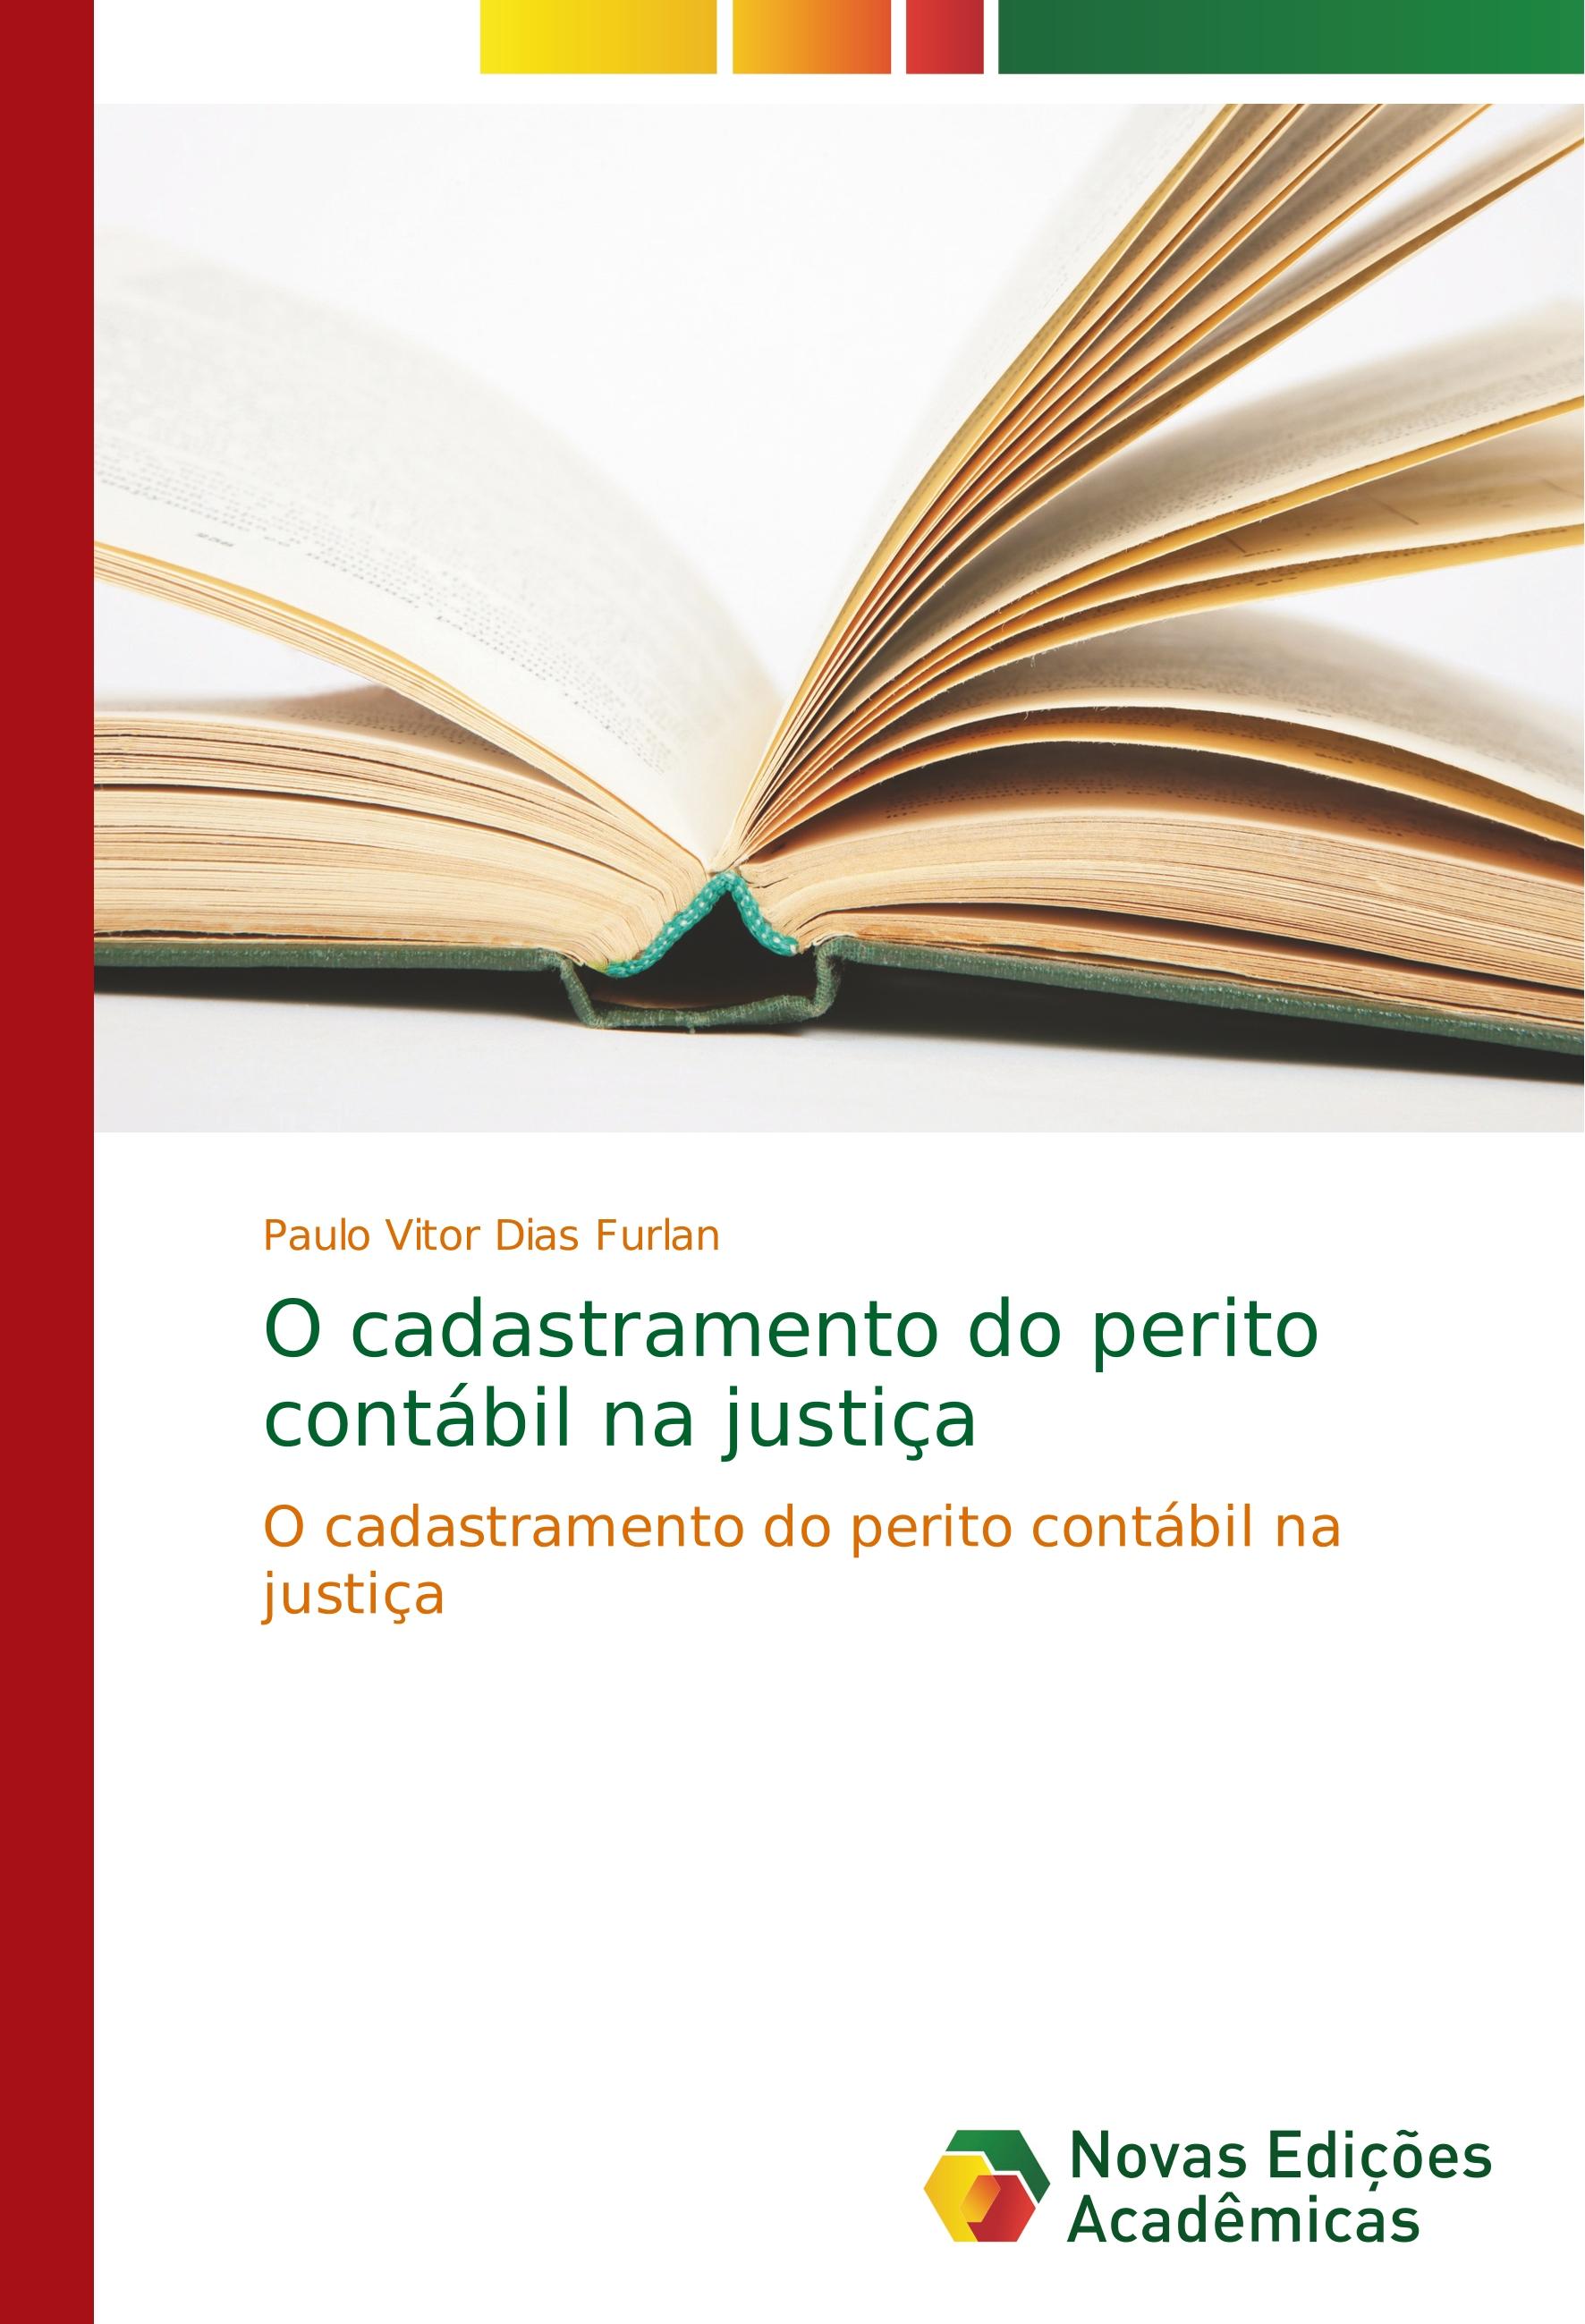 O cadastramento do perito contábil na justiça - Paulo Vitor Dias Furlan